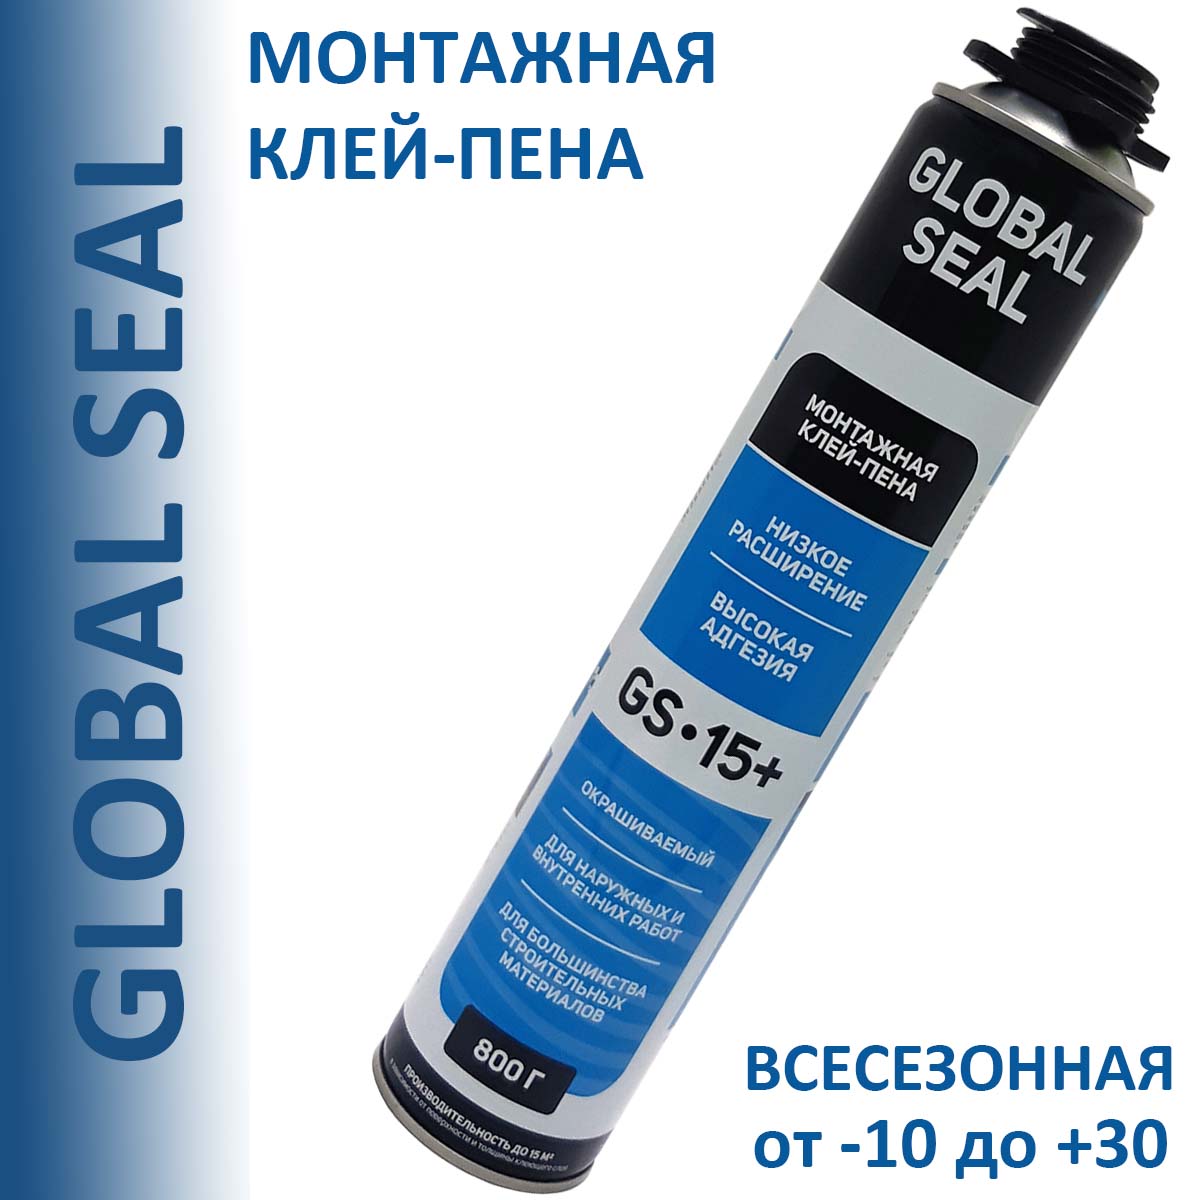 Клей-пена Монтажная Global Seal GS-15, всесезонная, 800 гр. монтажная клей пена jetfix 10036 750 мл